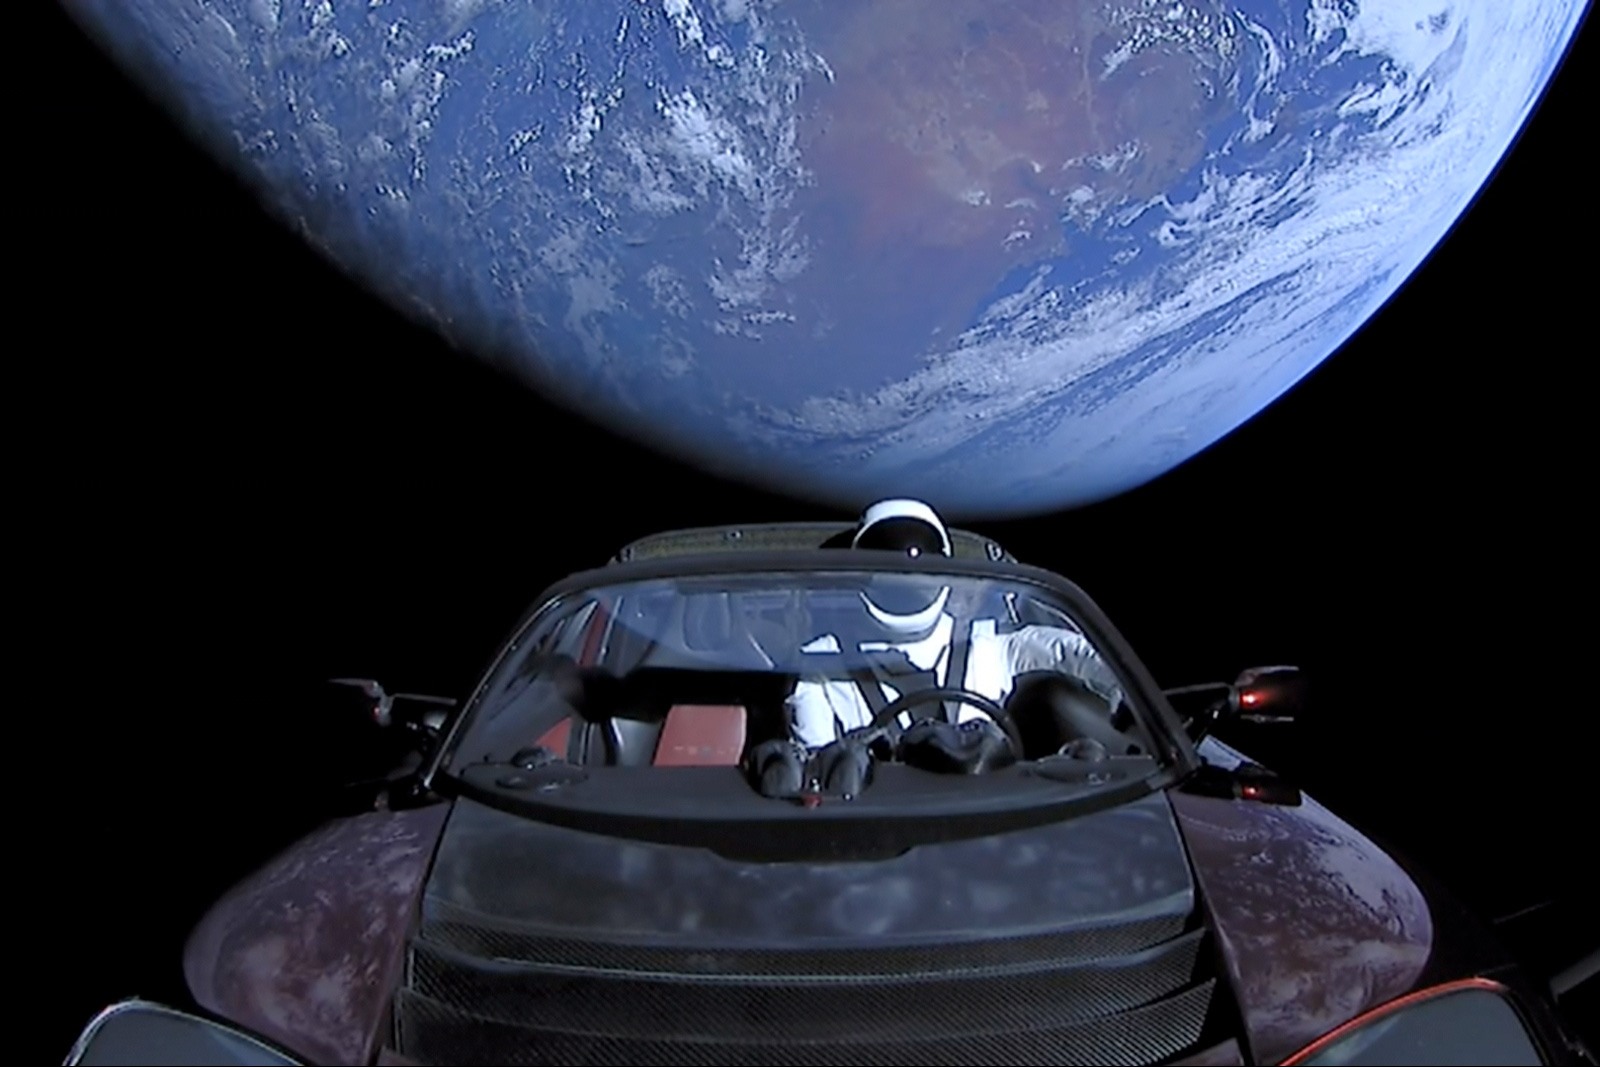 Website follows journey of Elon Musk's Tesla Roadster through space | DeviceDaily.com